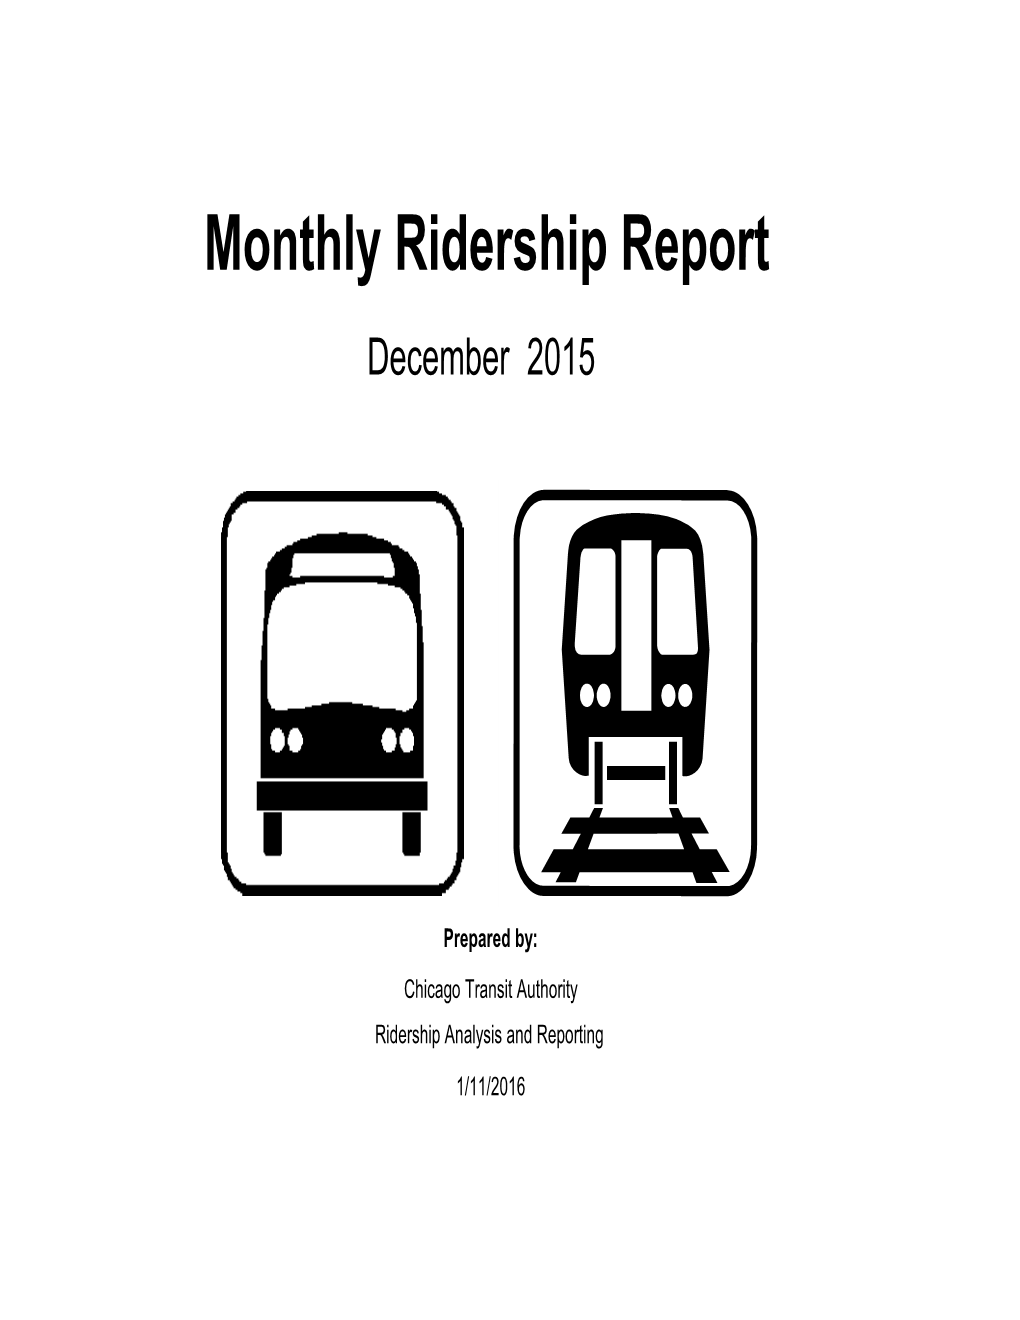 Monthly Ridership Report December 2015